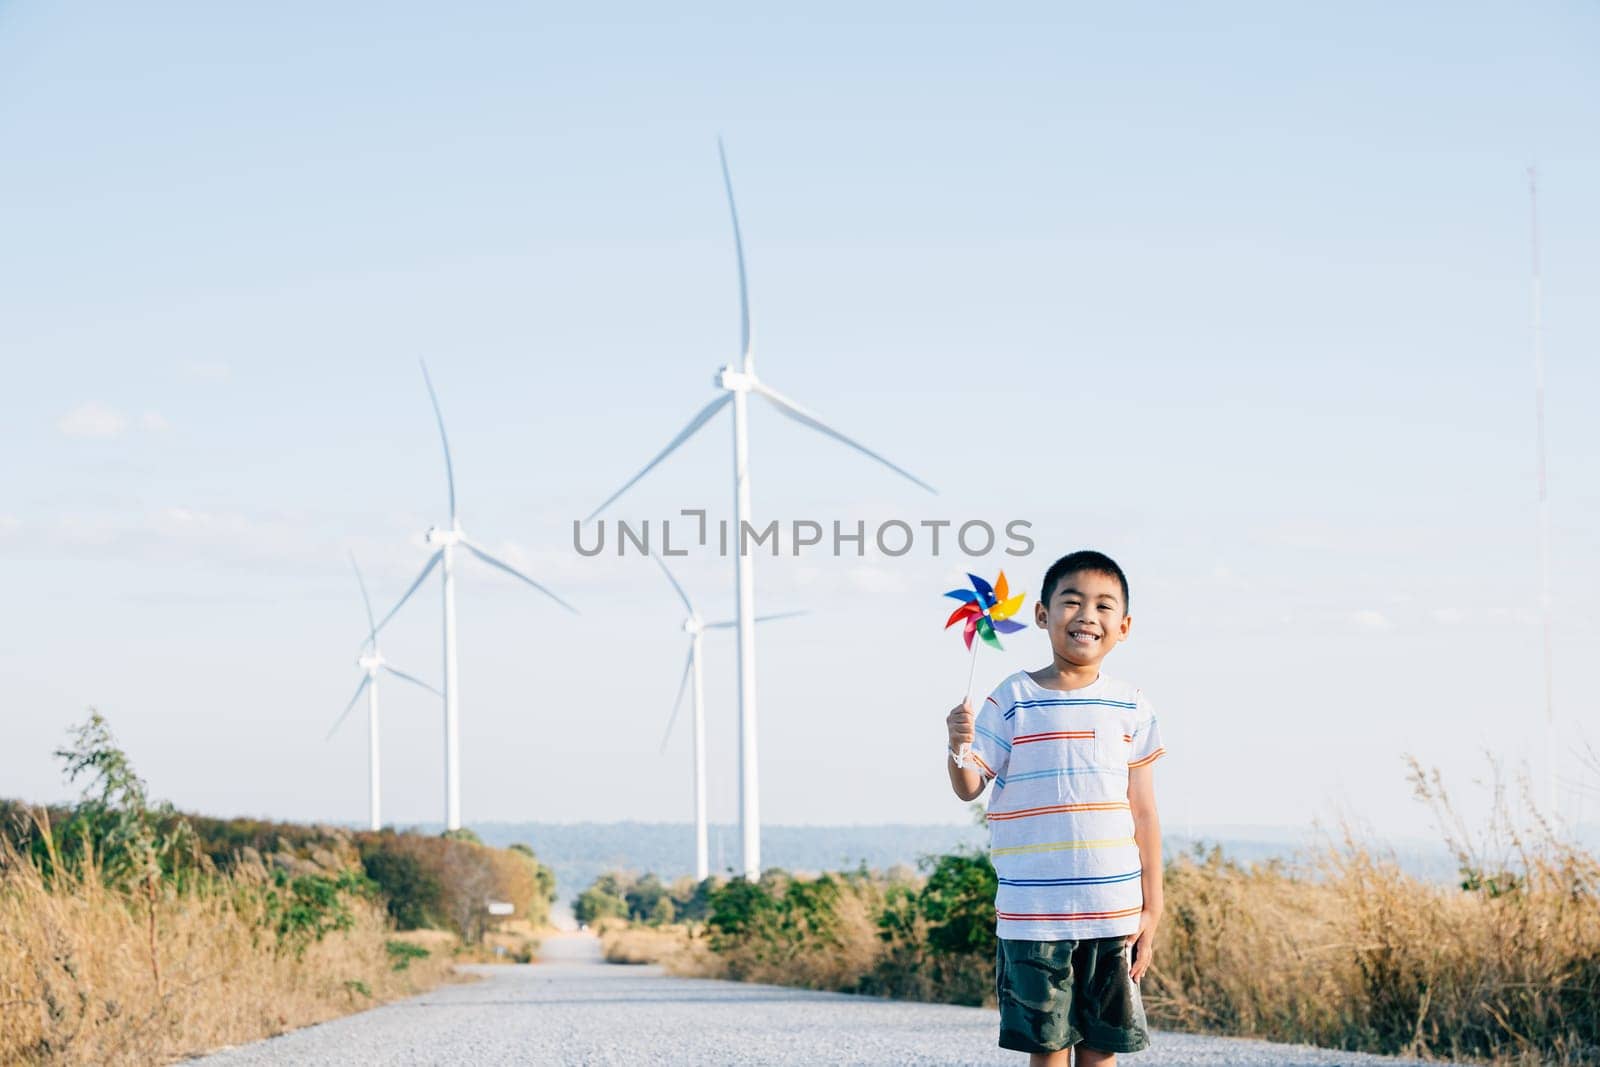 Boy's playful fascination near wind turbines holding a pinwheel toy highlights joy of wind energy by Sorapop